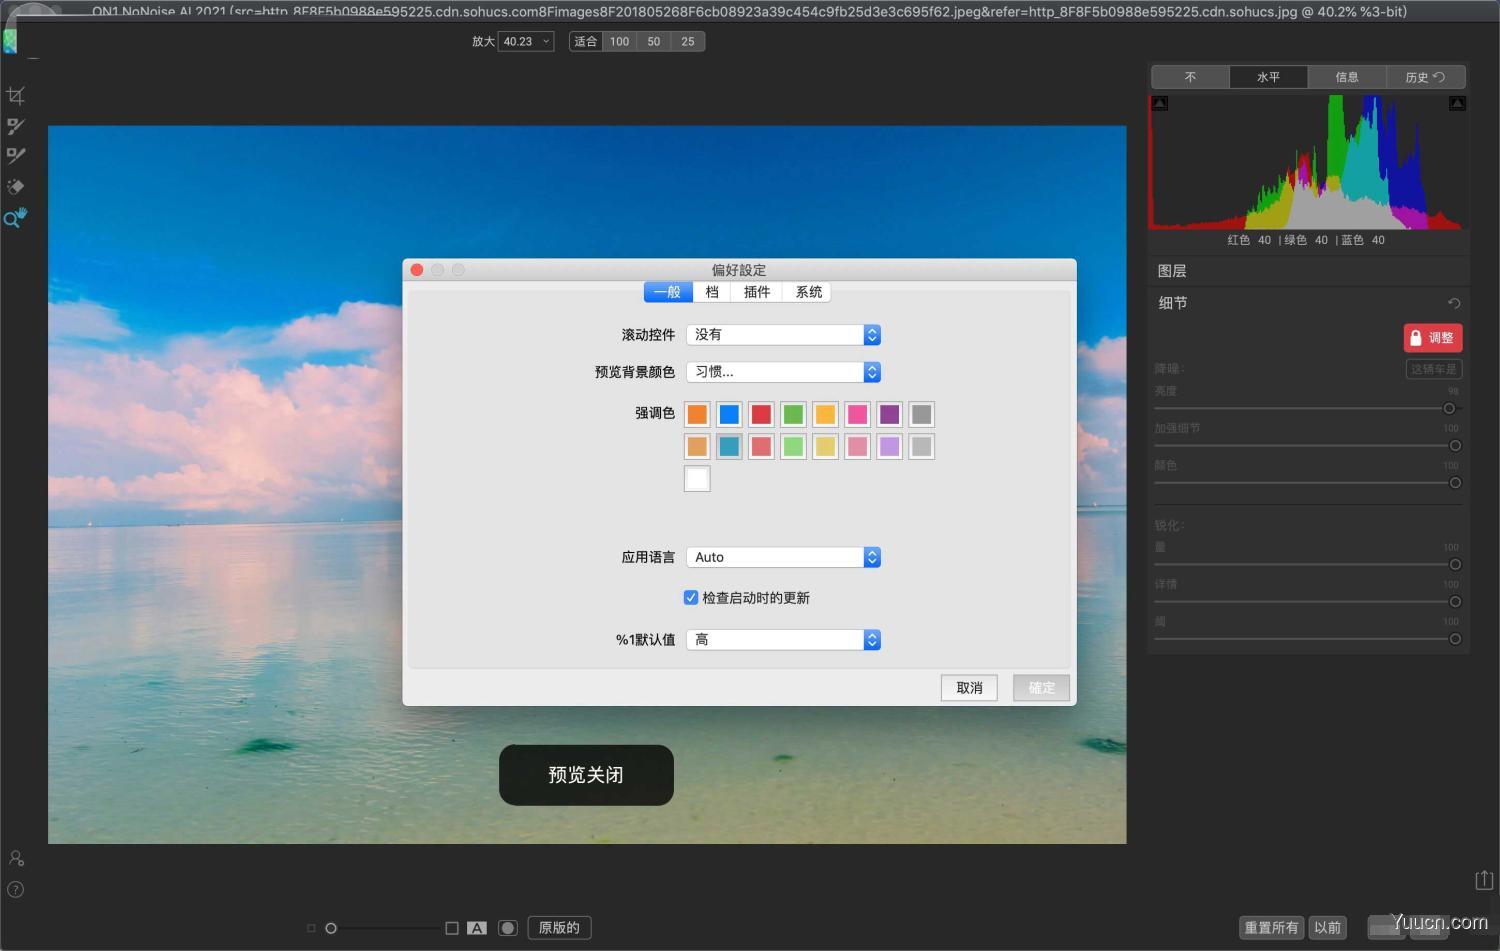 摄影照片降噪工具ON1 NoNoise AI 2021 for Mac v16.0.1.11481 中文激活版